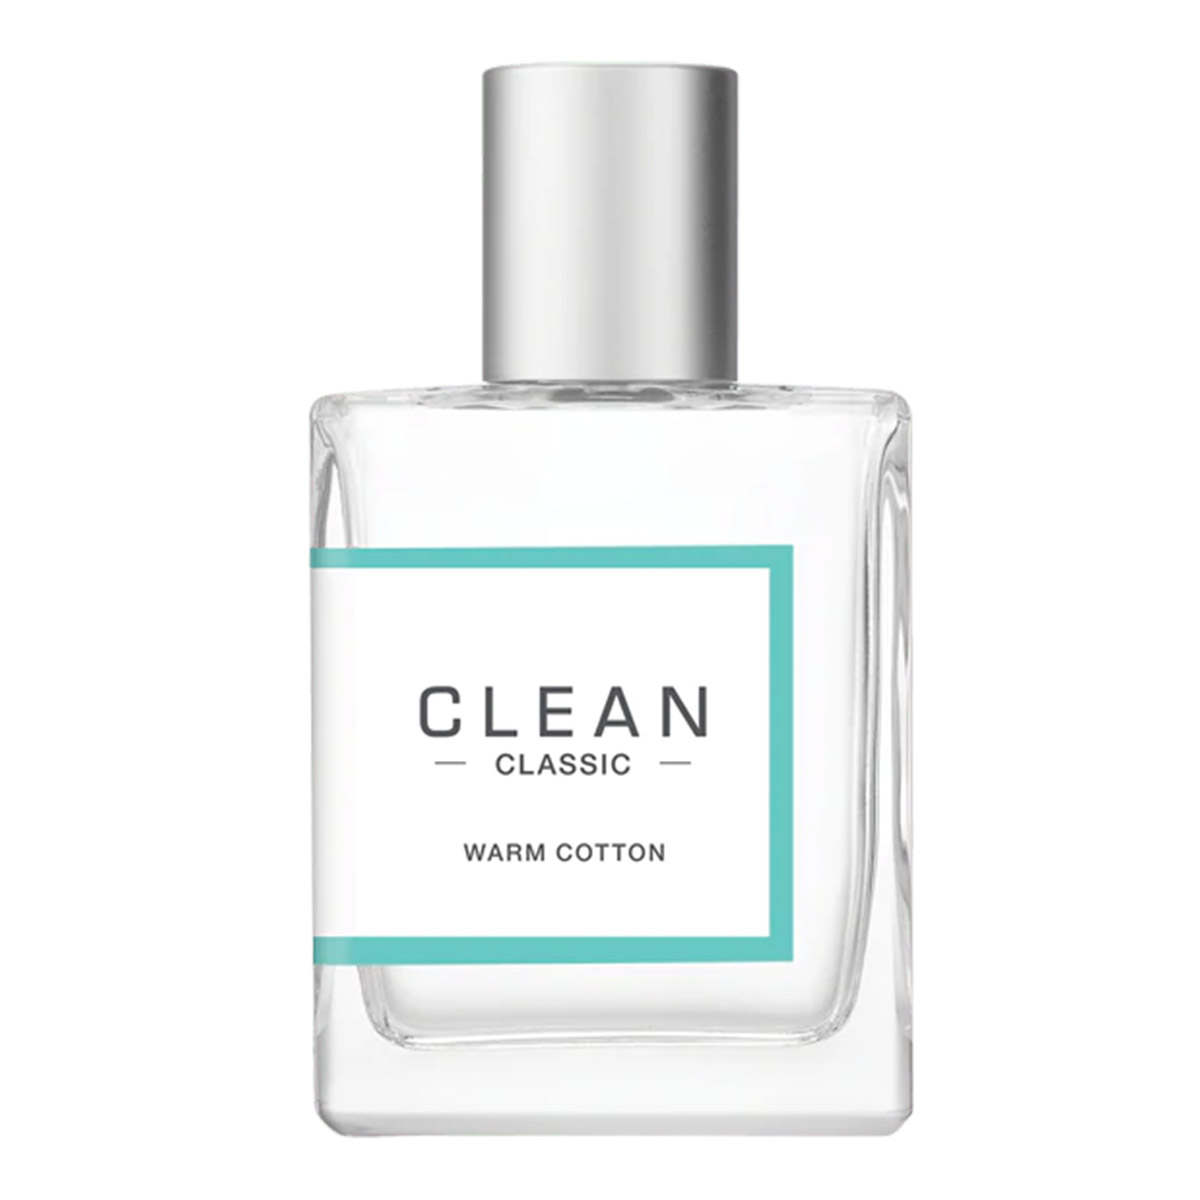 clean perfumes